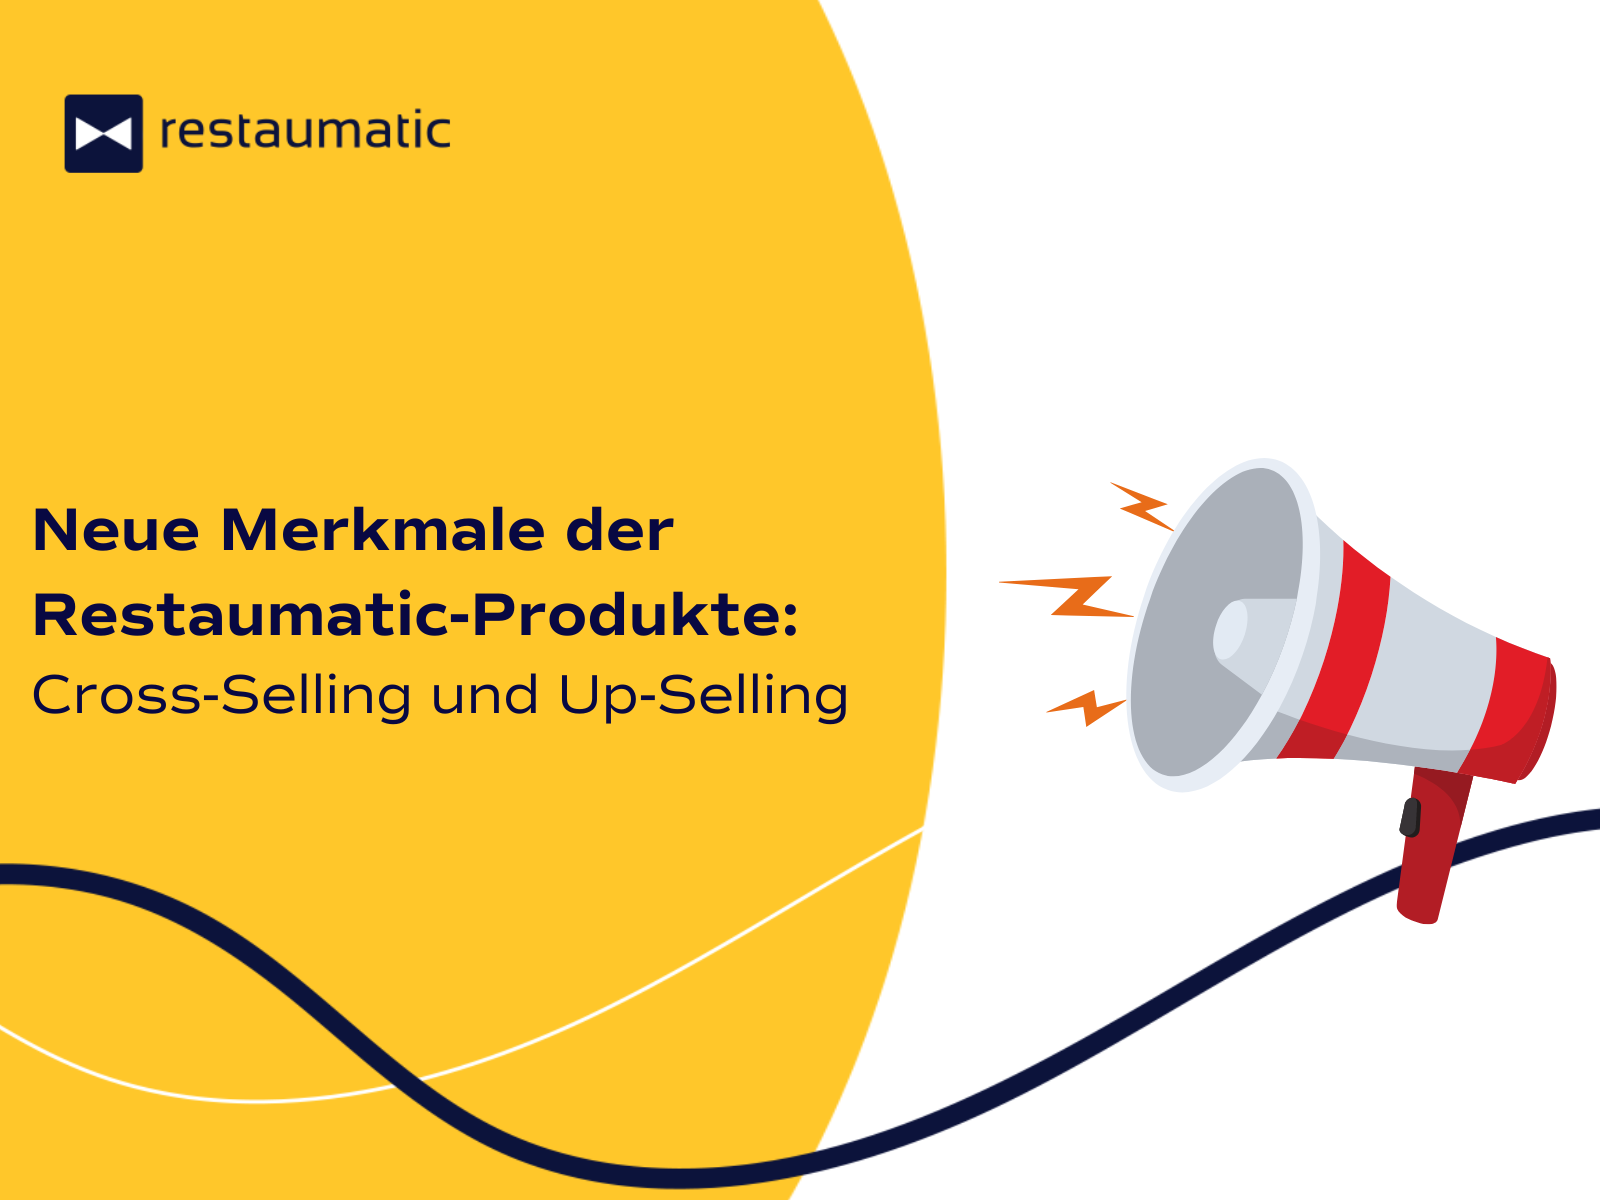 Restaumatic Produktinnovationen: Cross-Selling und Up-Selling